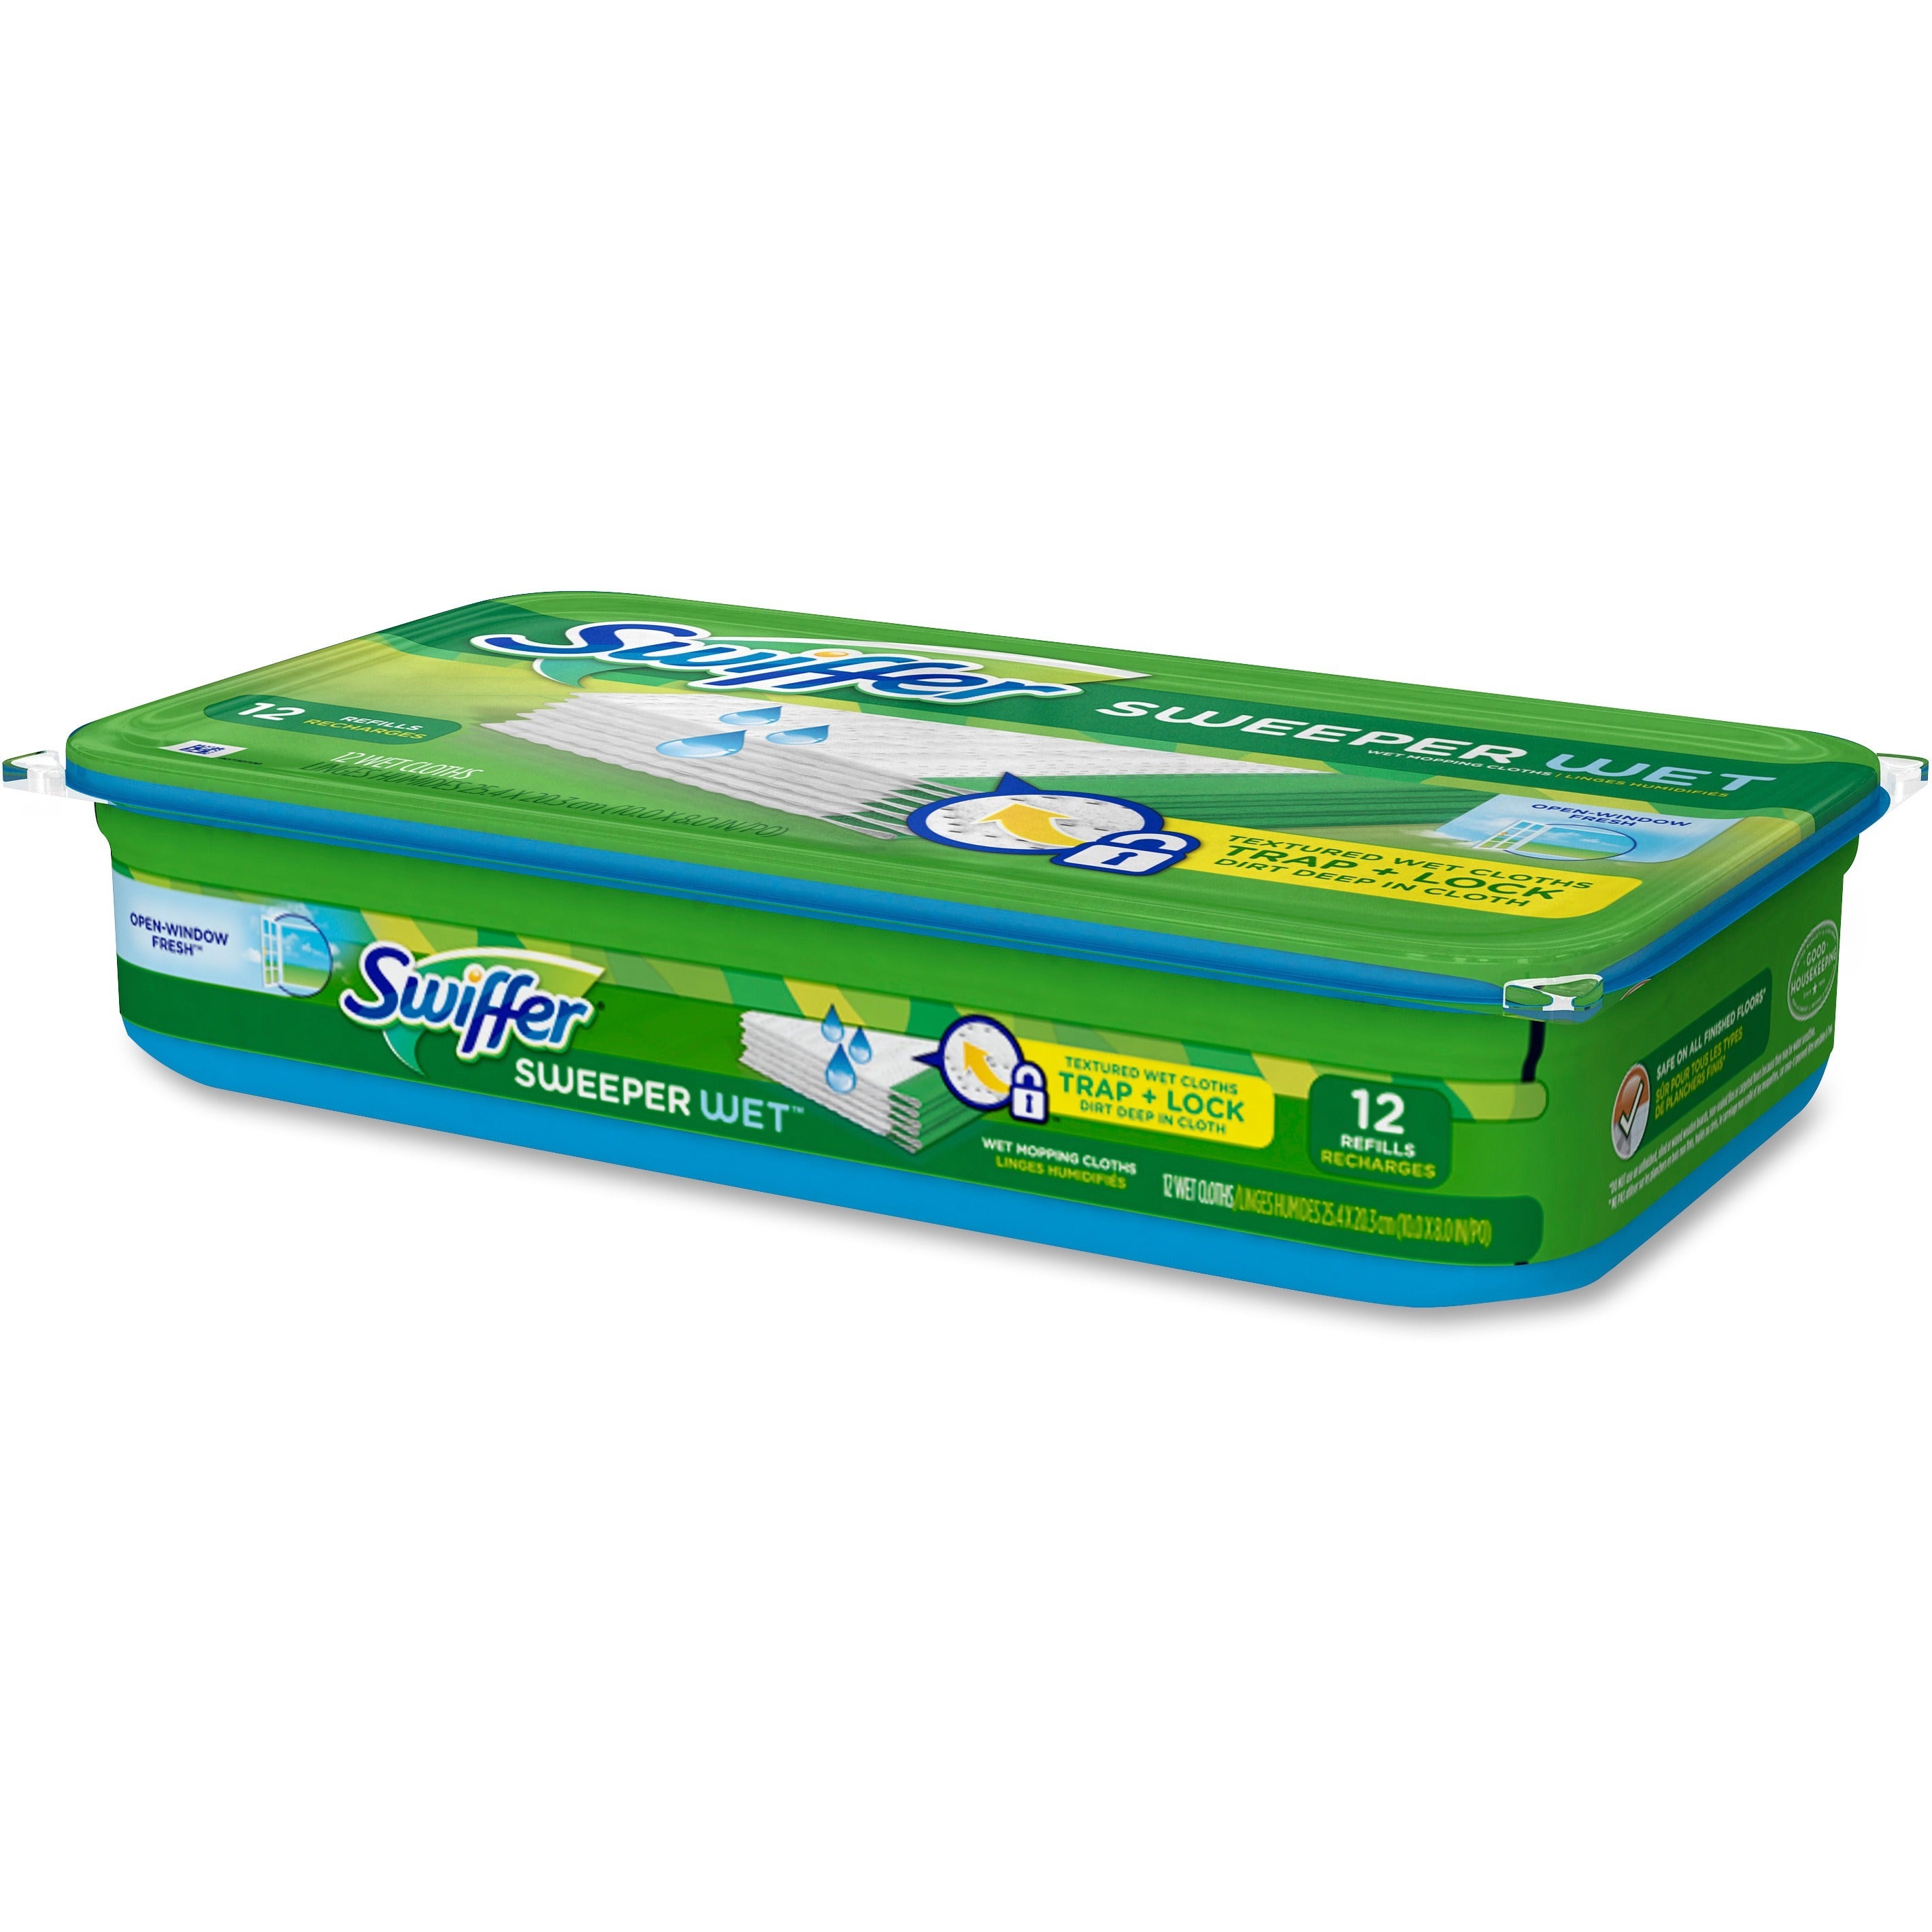 swiffer-sweeper-wet-cloths-disposable-green-144-carton_pgc35154ct - 2